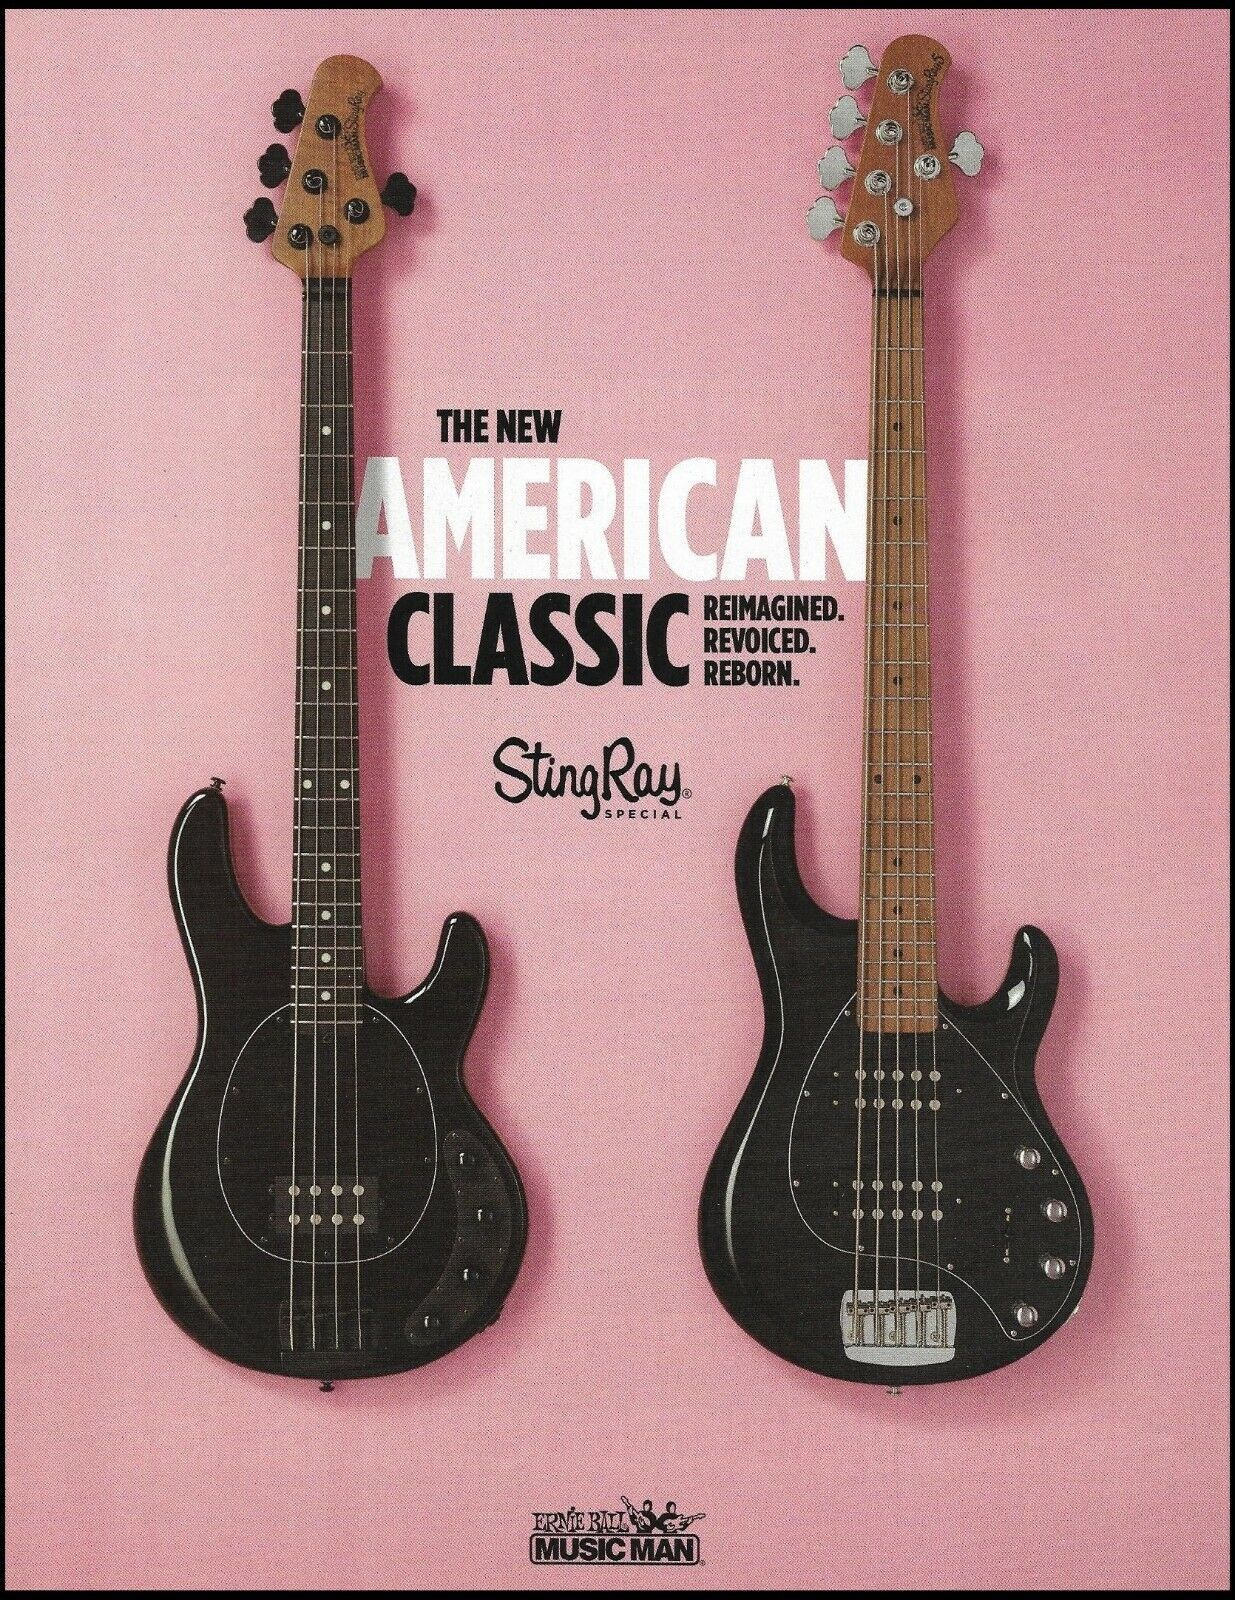 Ernie Ball Music Man American Classic Series StingRay Special Bass Guitar ad